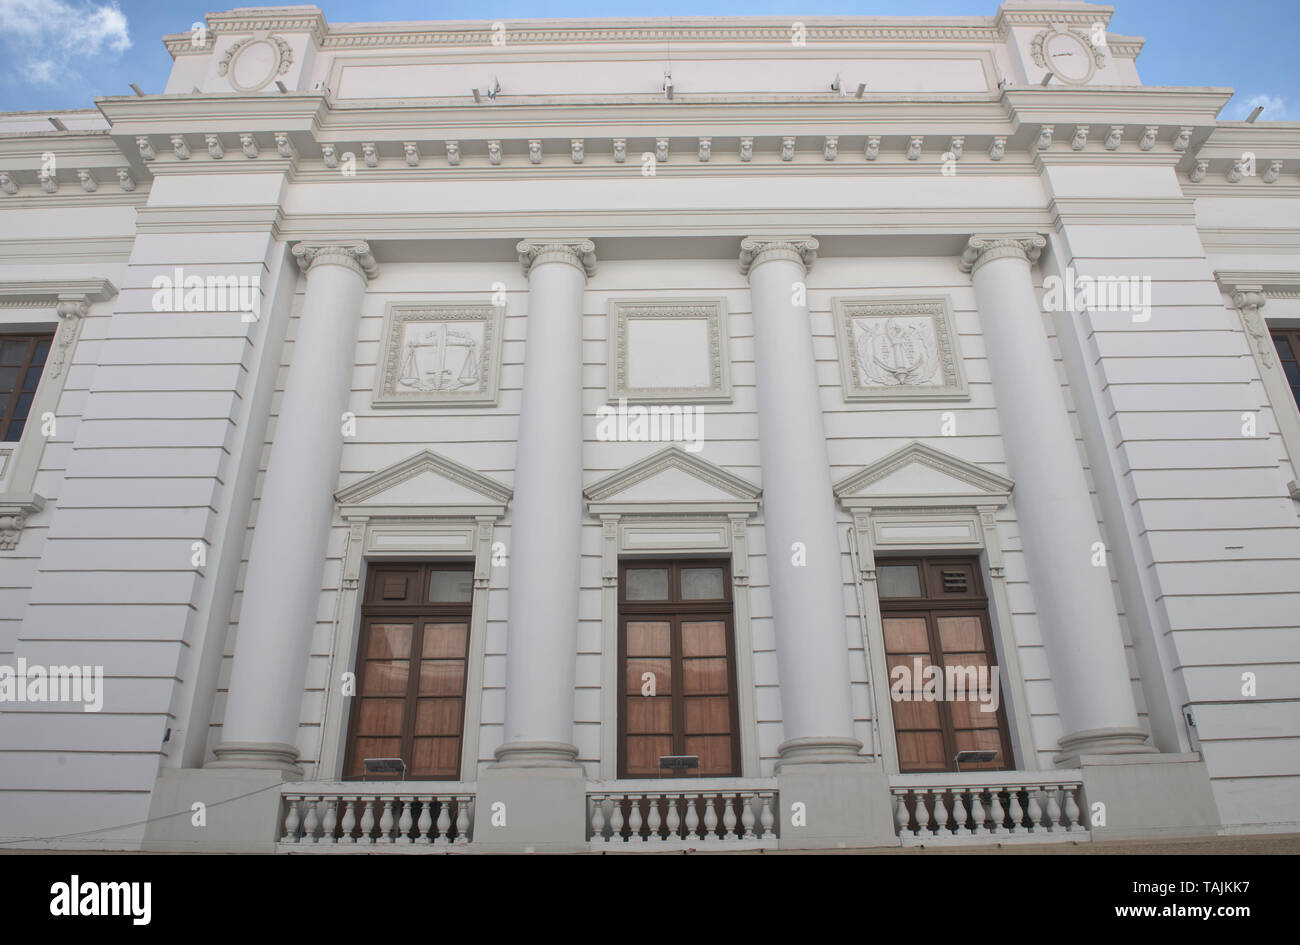 Architecture coloniale espagnole en la Ciudad Blanca (La ville blanche), Sucre, Bolivie Banque D'Images